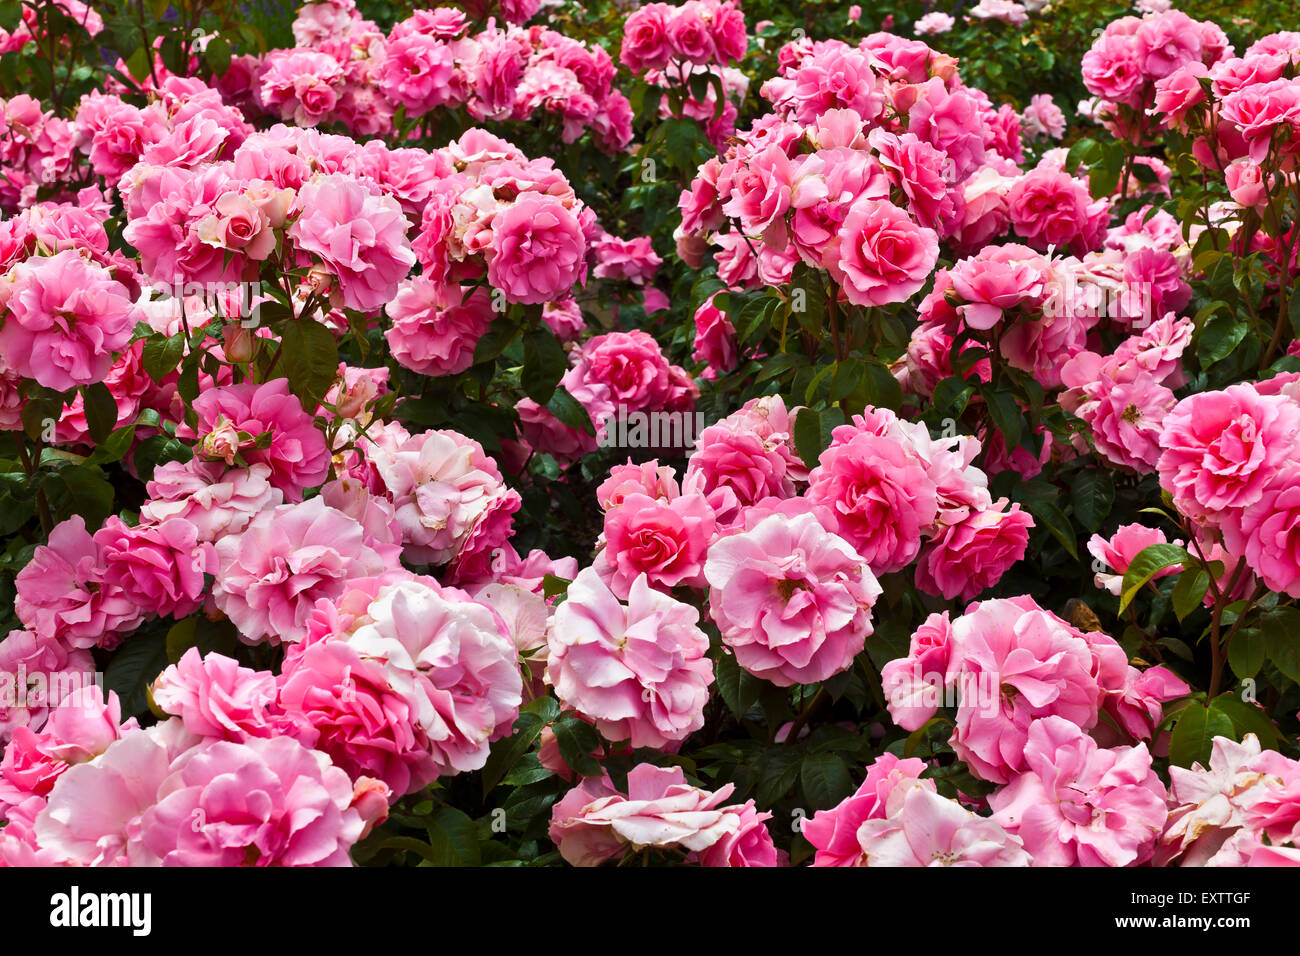 Floribunda Rosa Rose in un aiuola vicino. Foto Stock